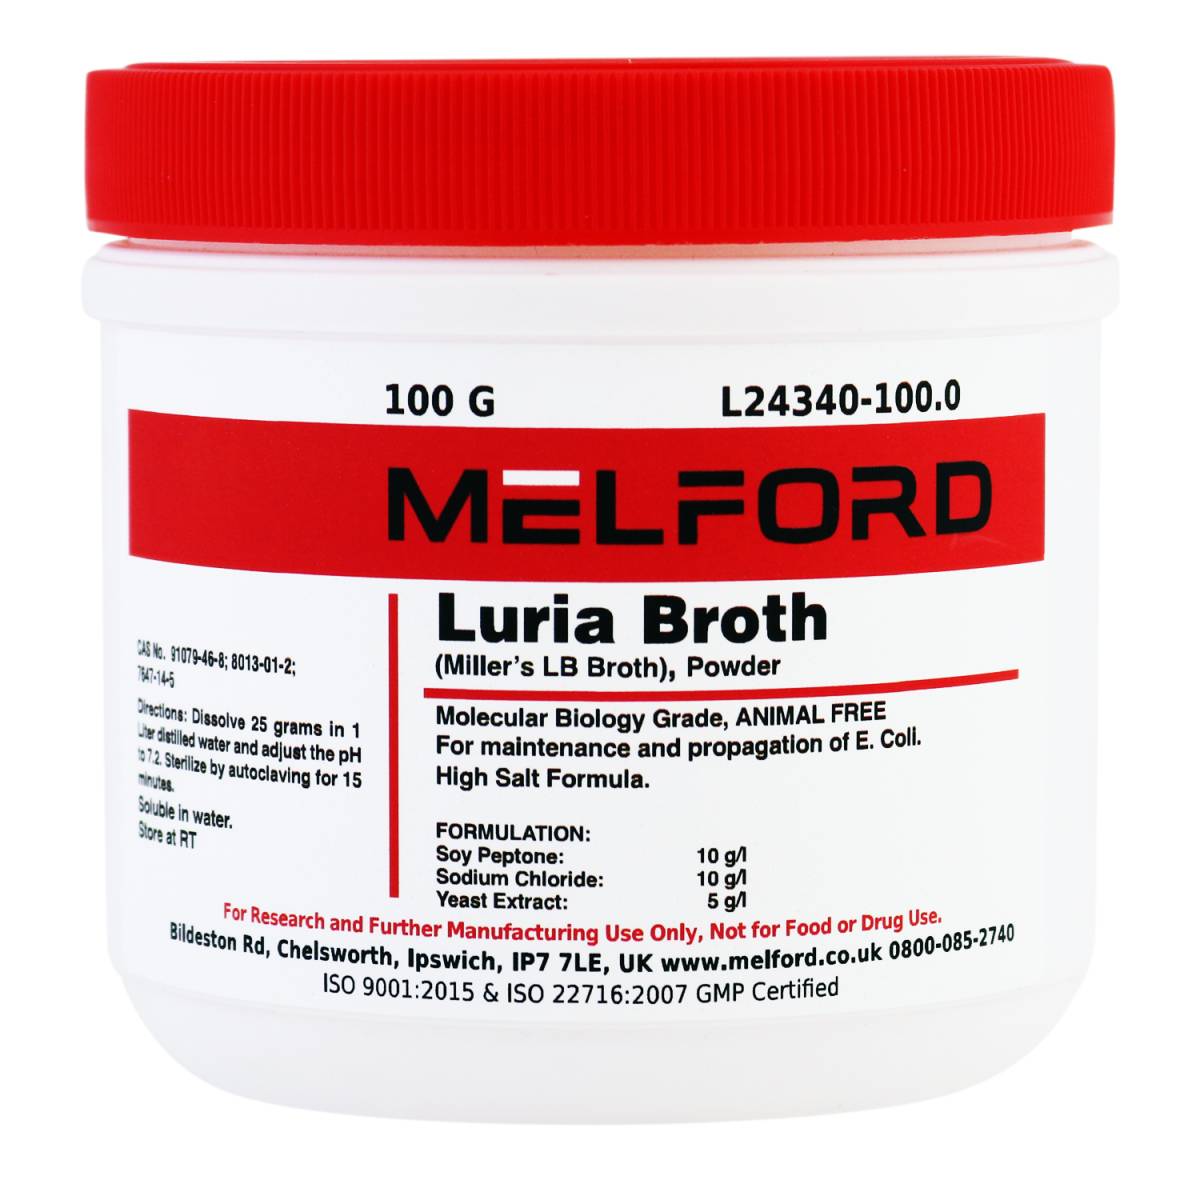 Luria Broth (Miller’s LB Broth) Animal Free, Powder, 100 Grams